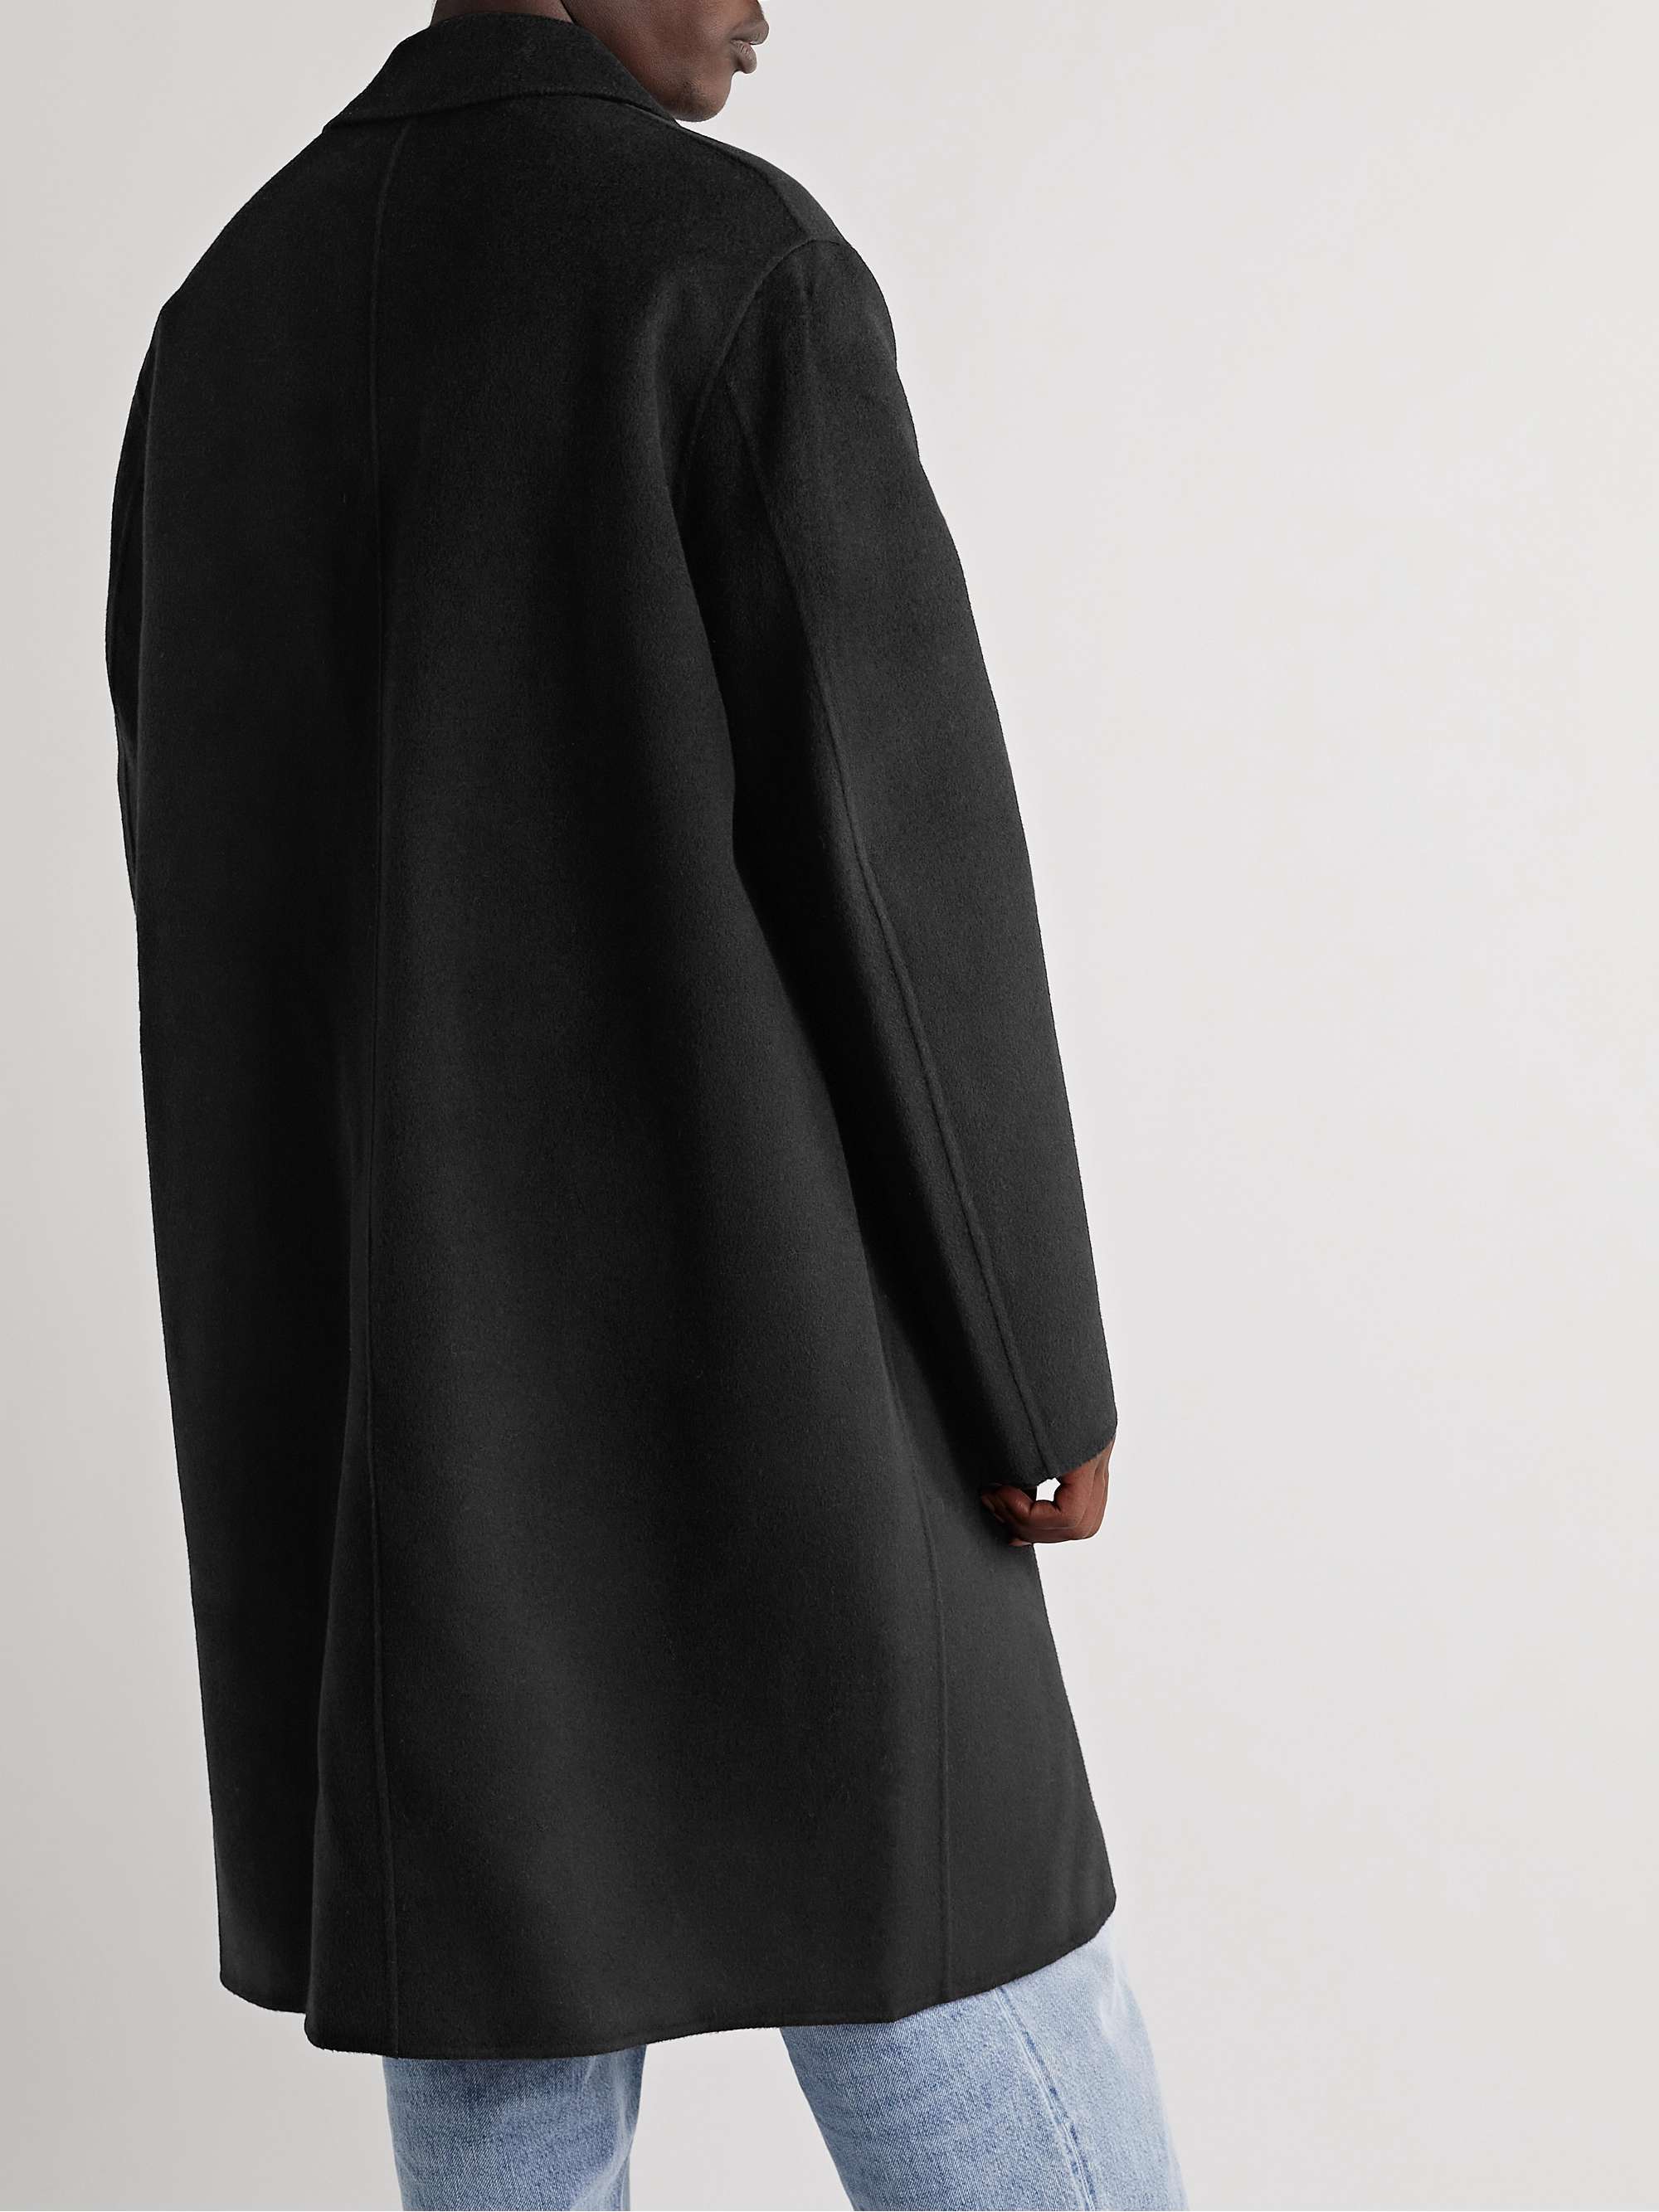 Black Oversized Double-Faced Wool Coat | ACNE STUDIOS | MR PORTER